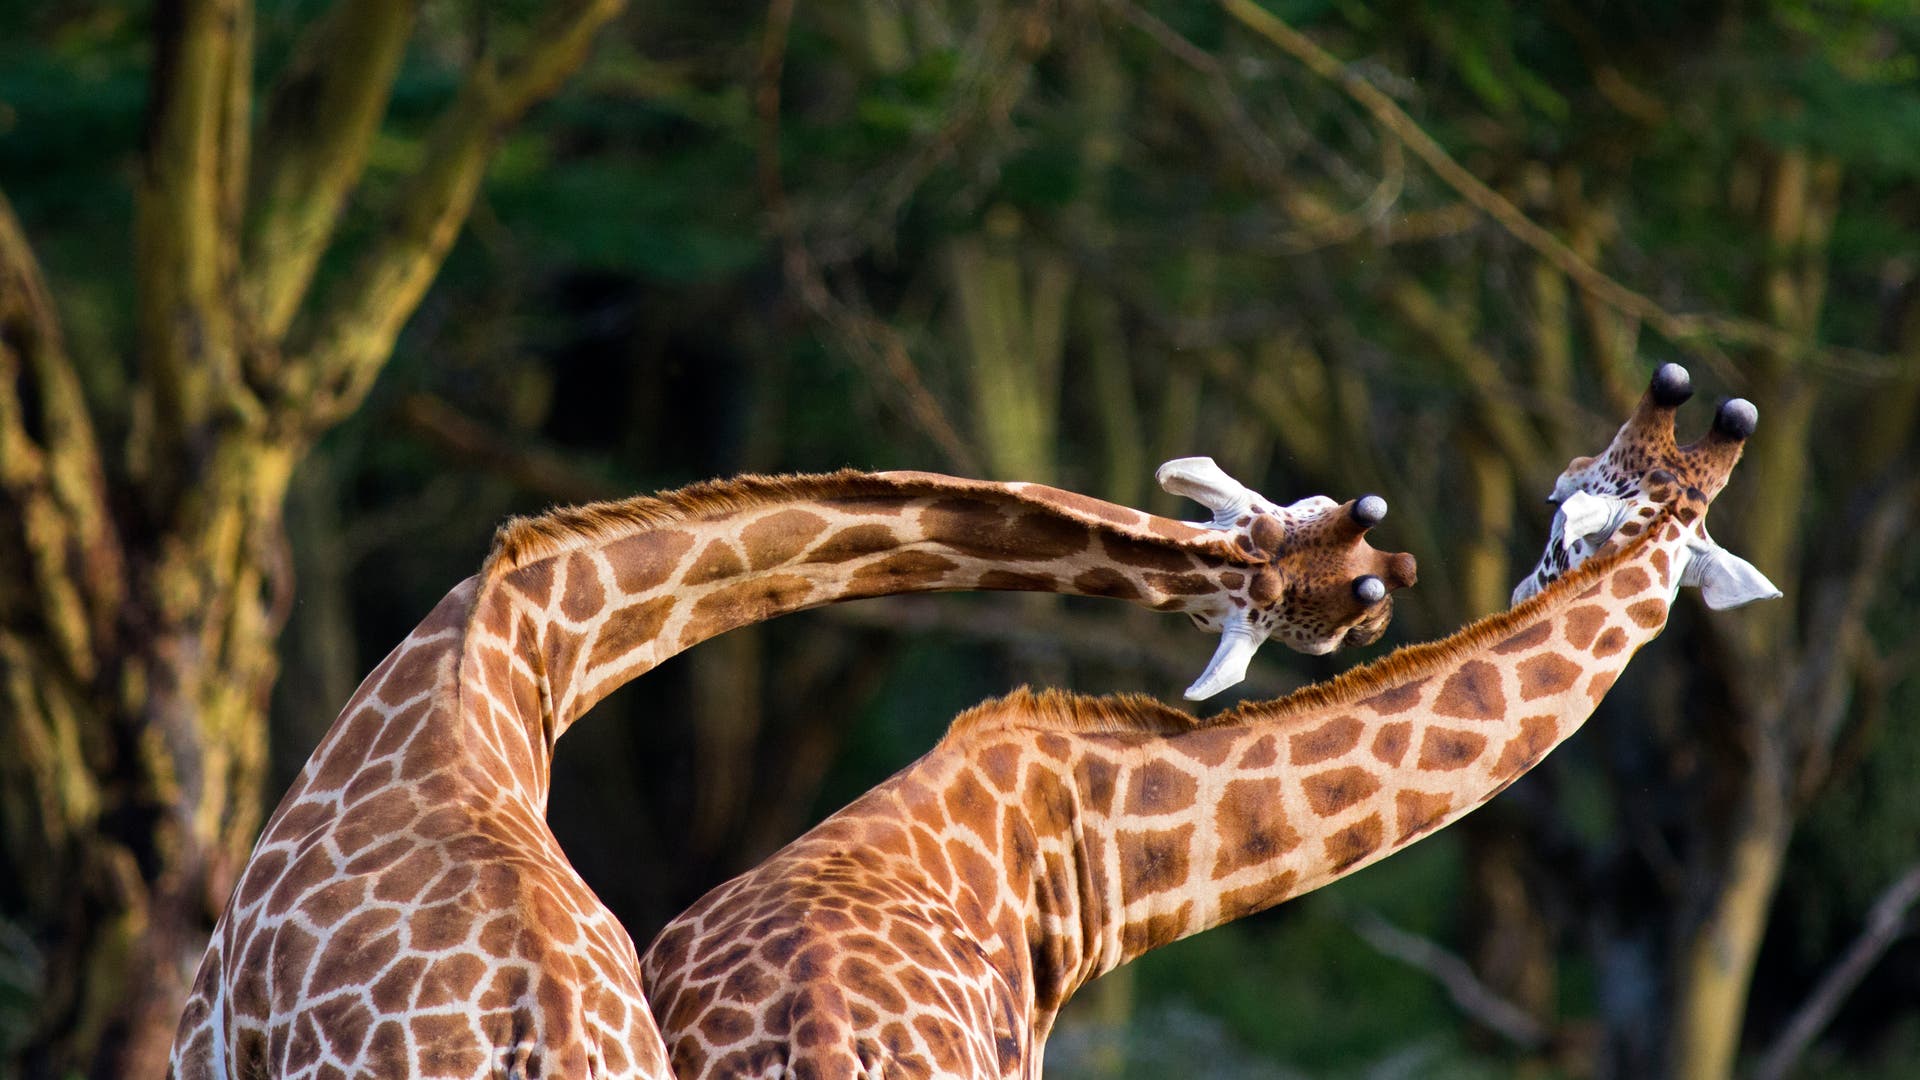 Evolution: Why do giraffes have such long necks?